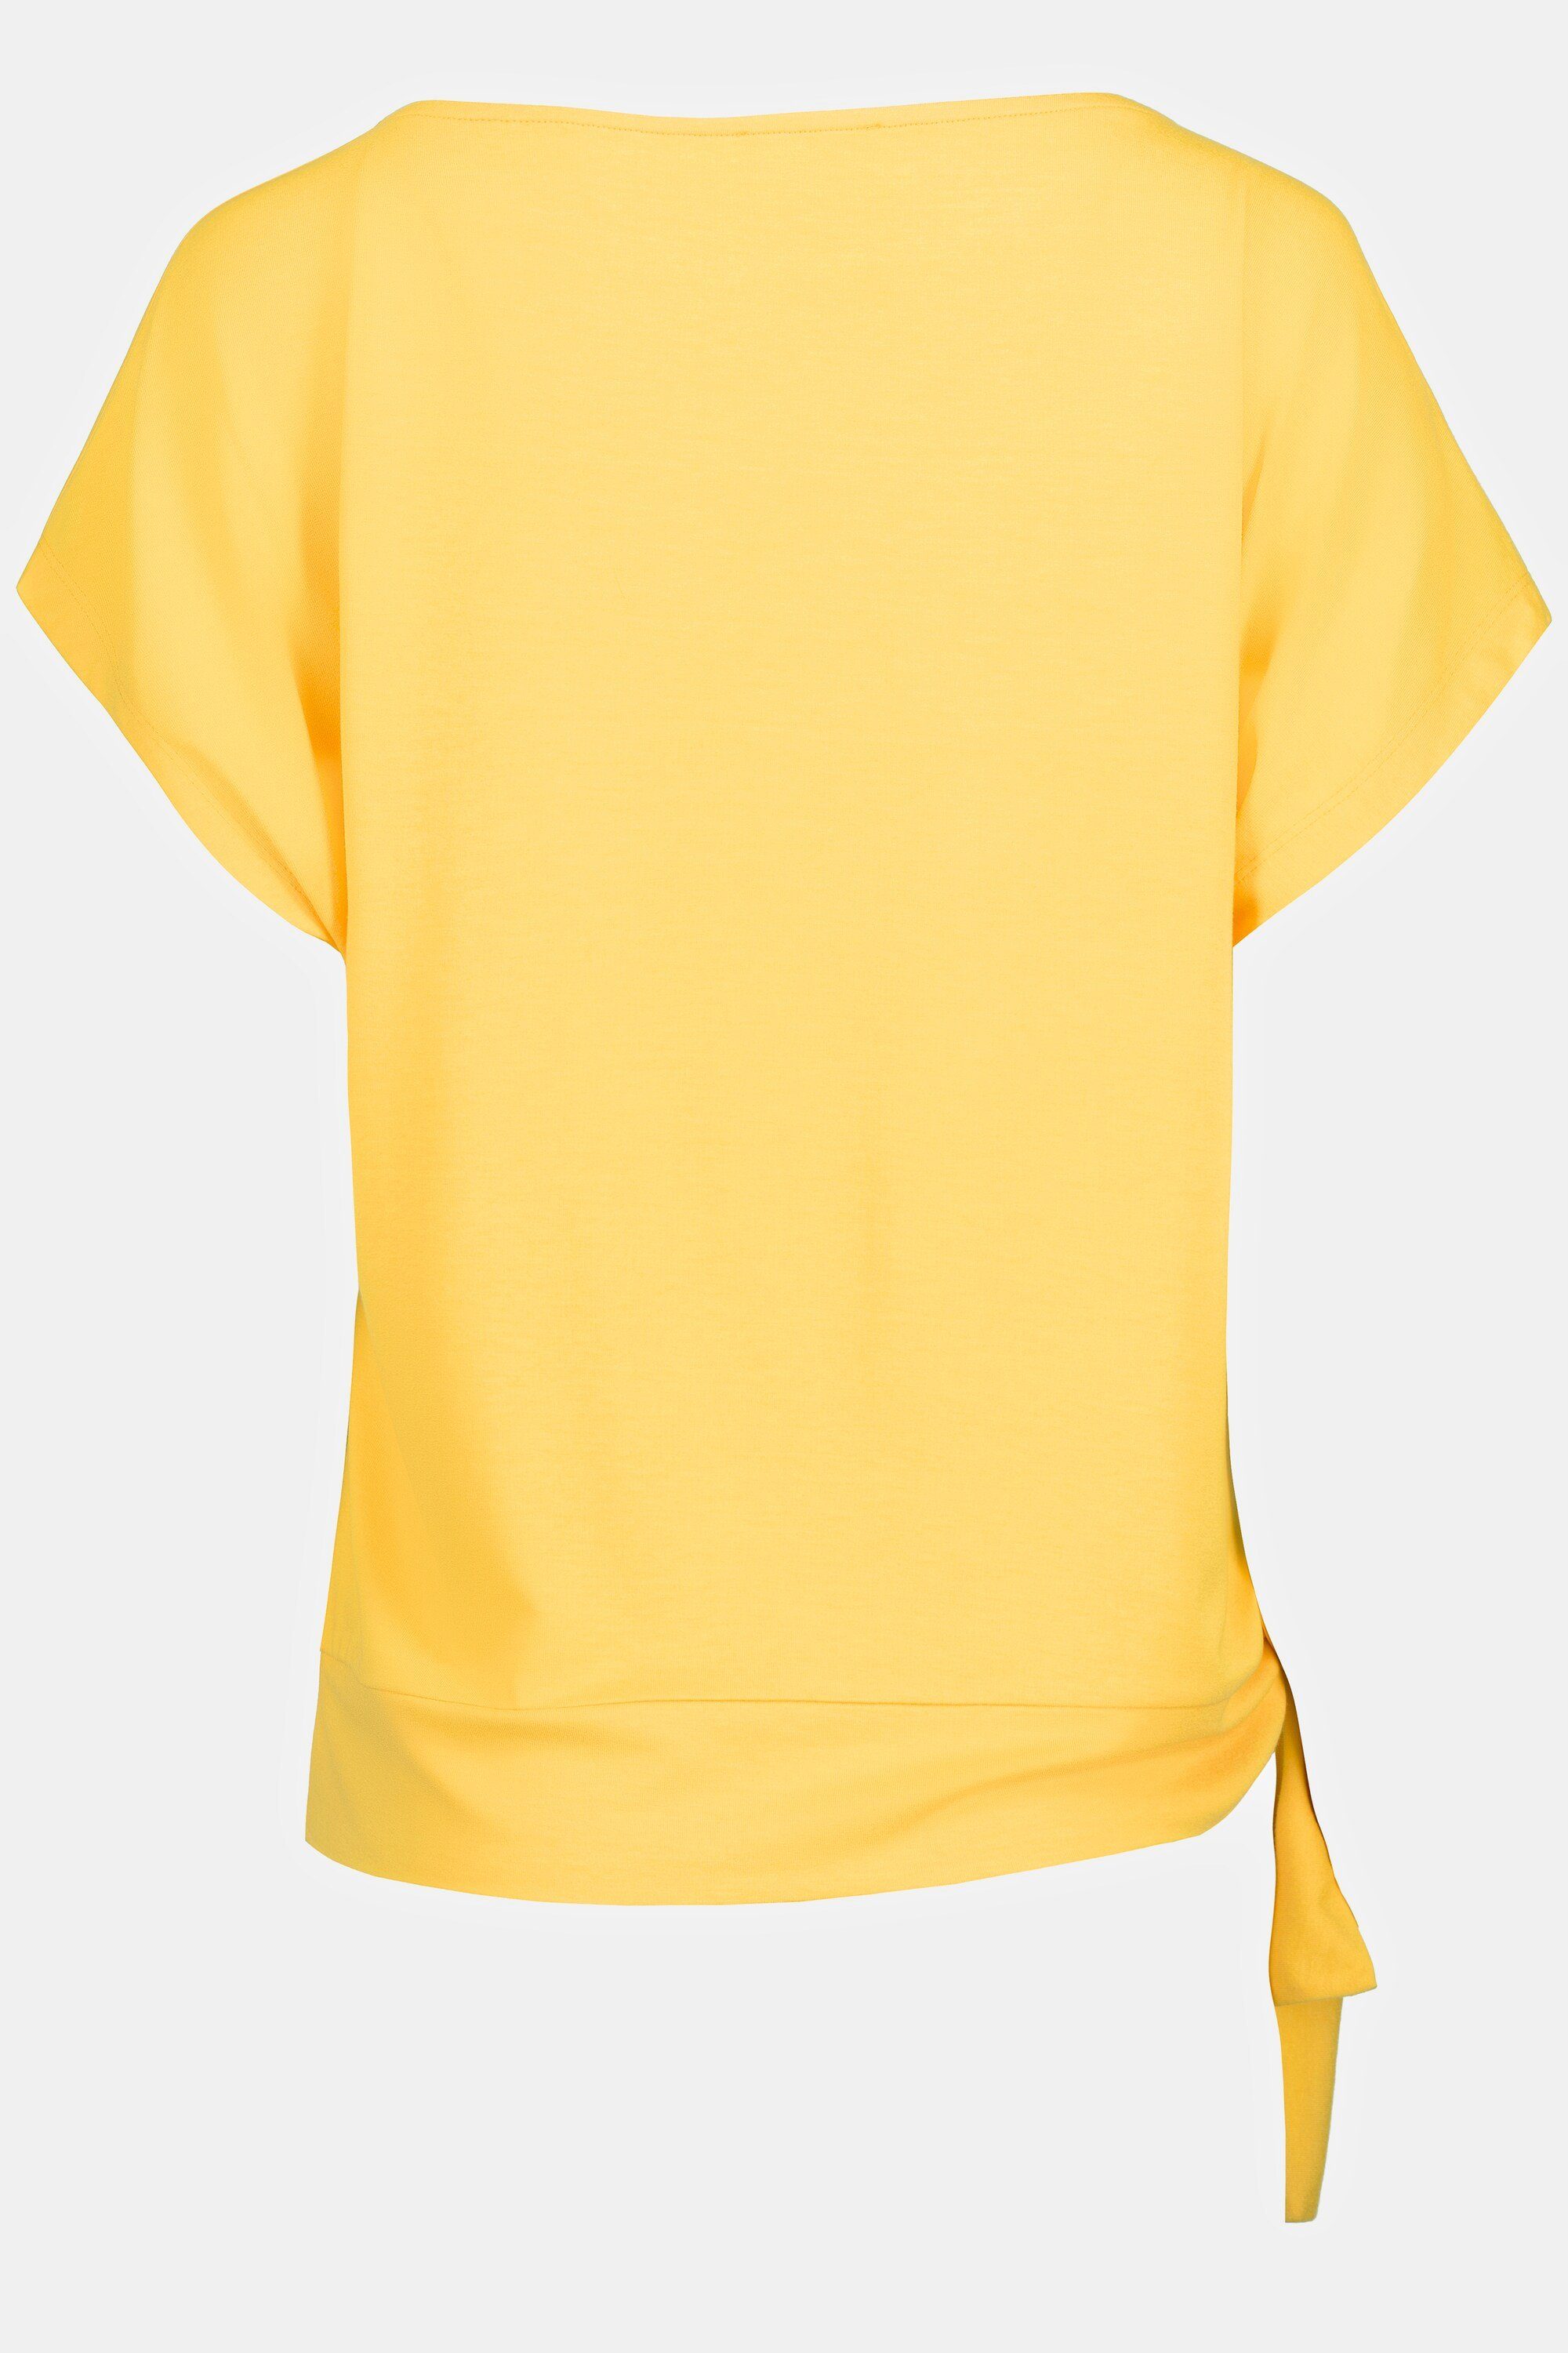 Damen Shirts Gina Laura Rundhalsshirt T-Shirt Identity U-Boot-Ausschnitt Saum Bindeband